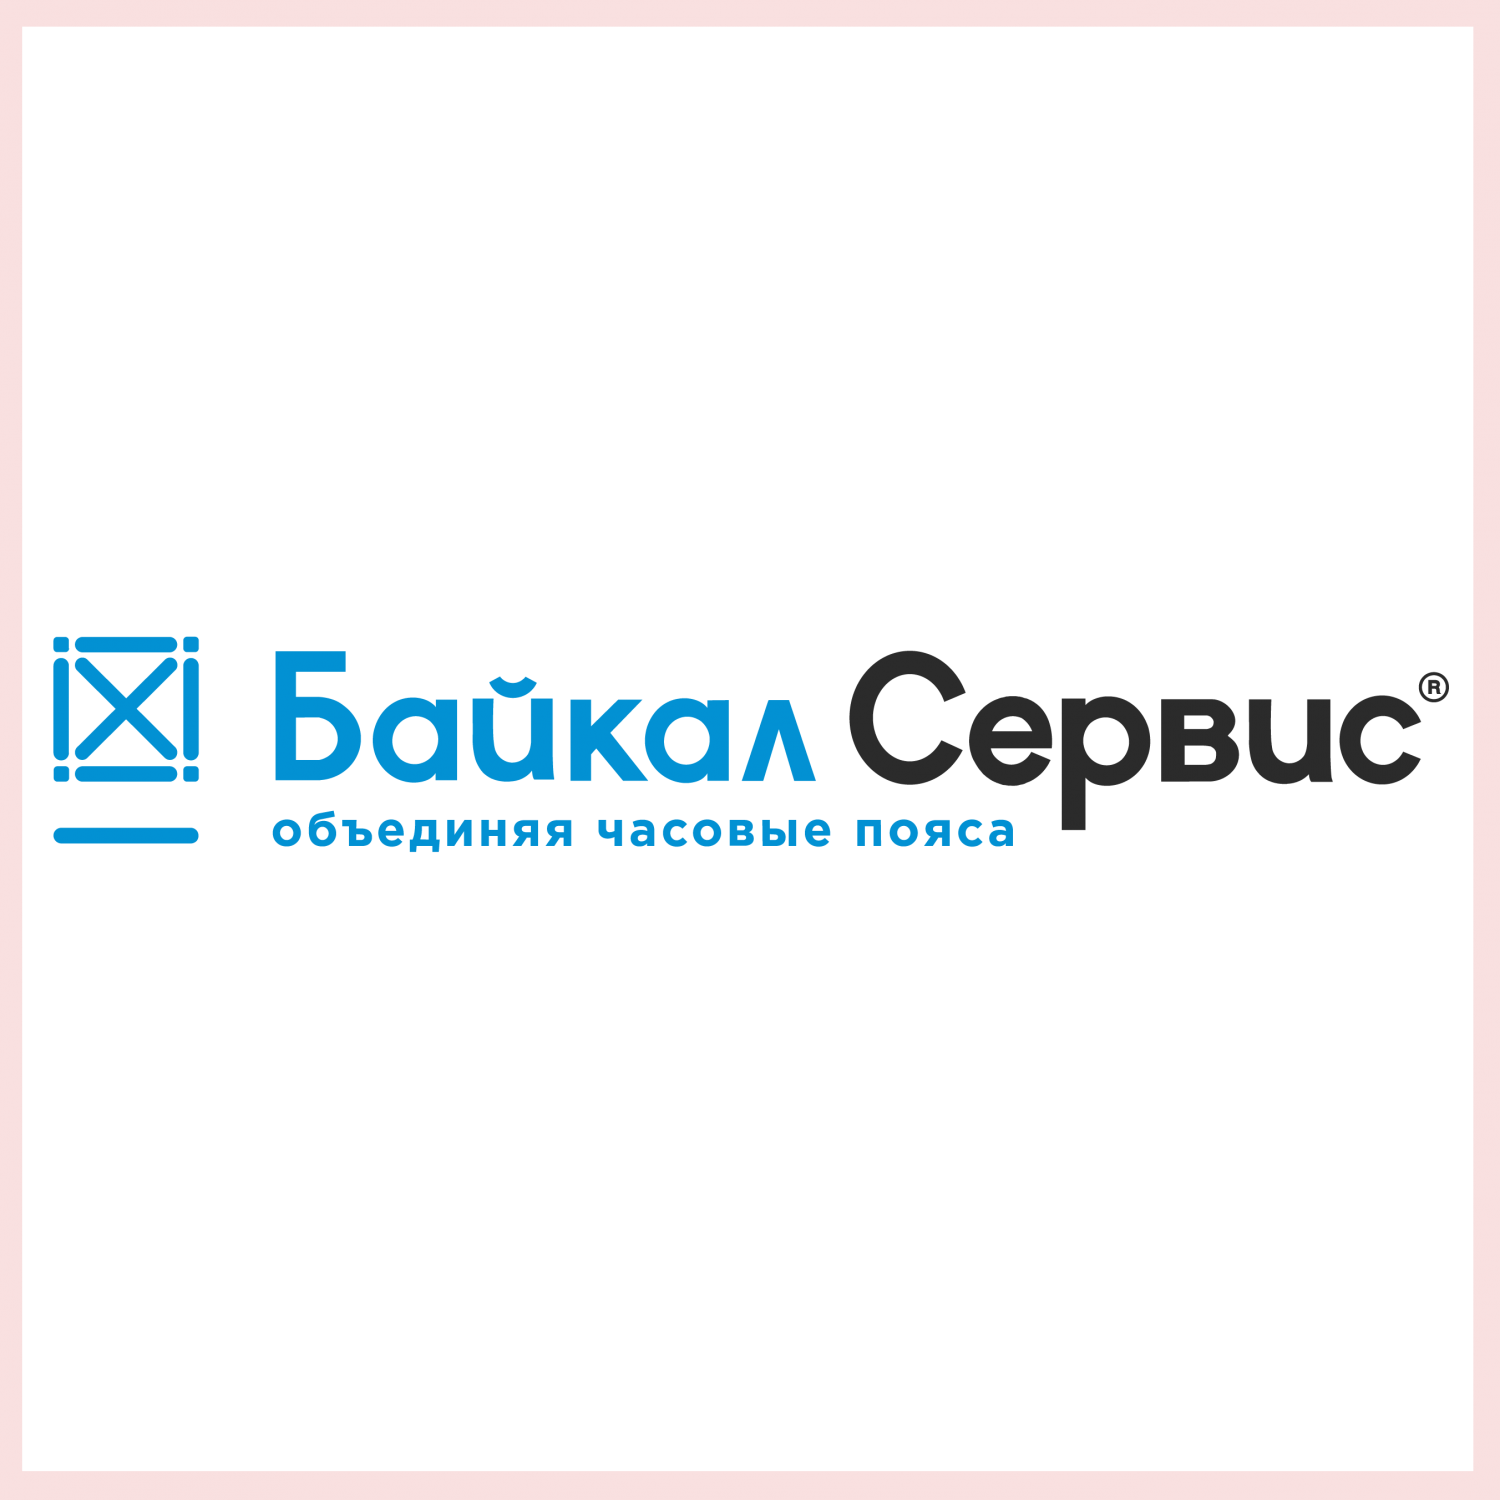 Байкал сервис. Байкал сервис транспортная компания. Байкал сервис лого. Логотип компании Байкал сервис. Байкал посылок сервис